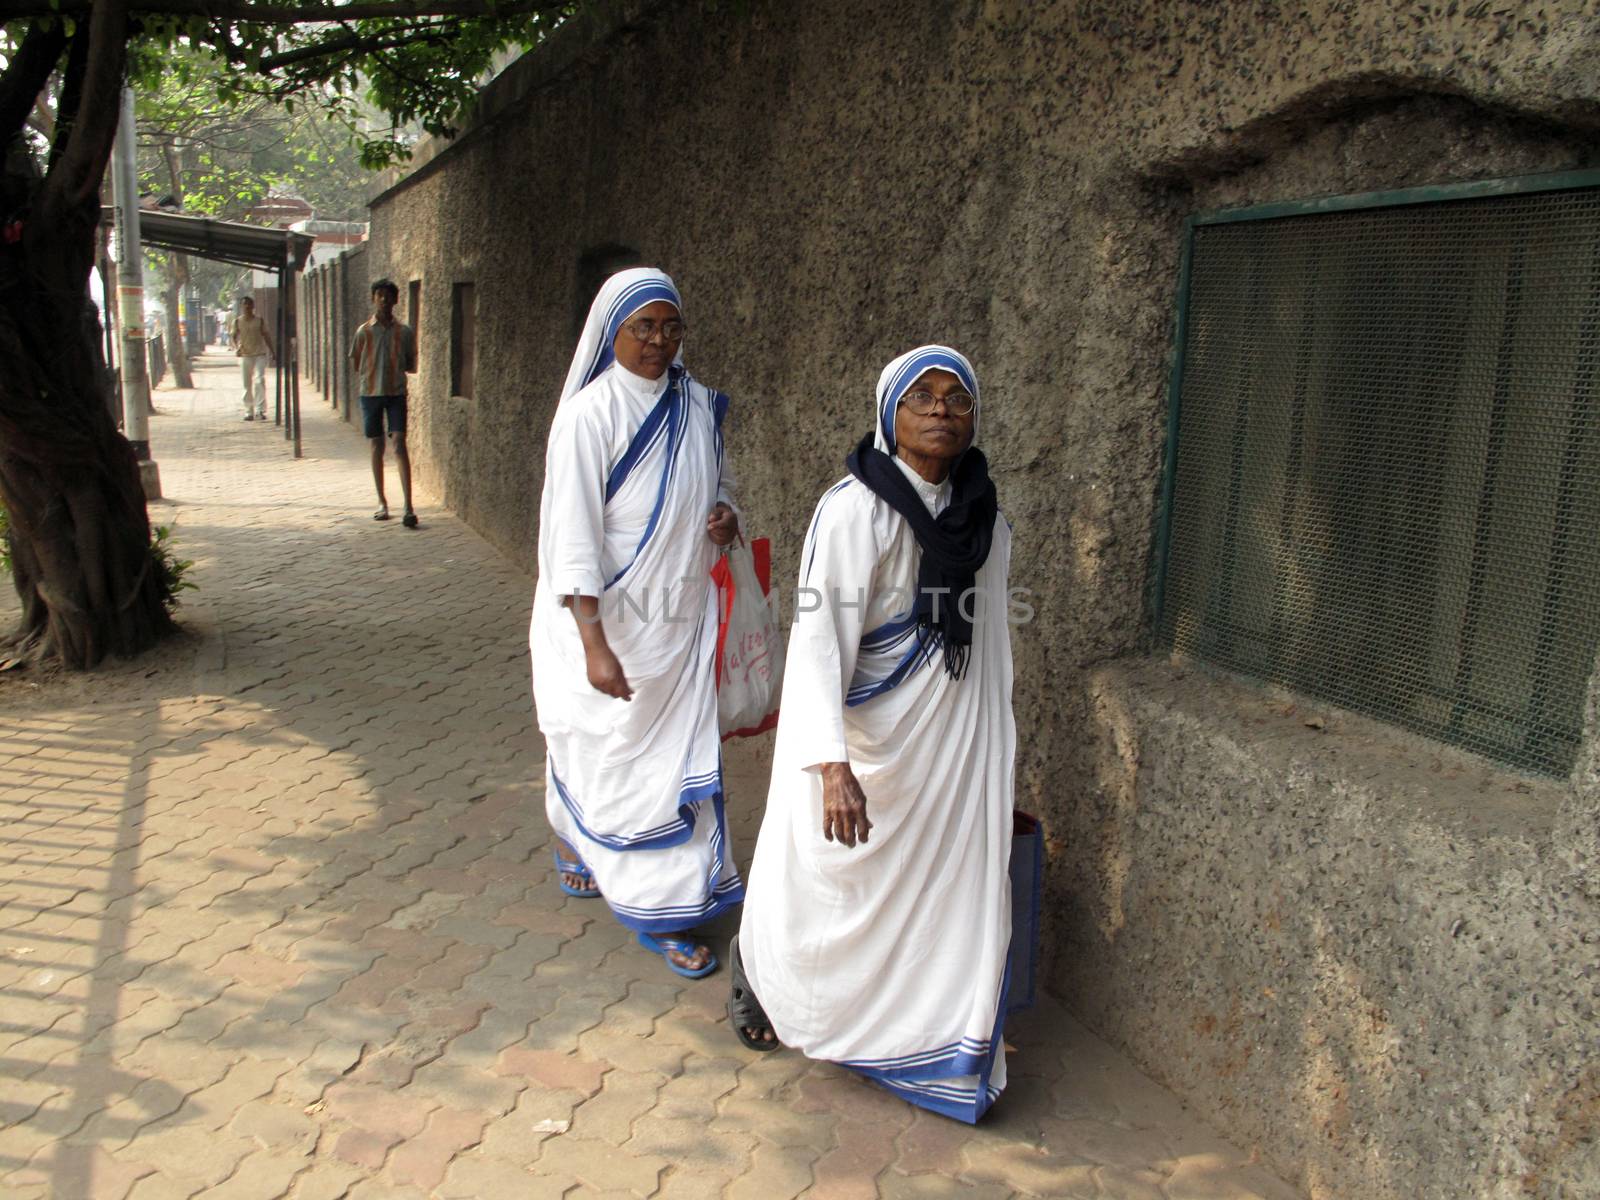 Sister of Missionaries of Charity at the streets of Kolkata by atlas